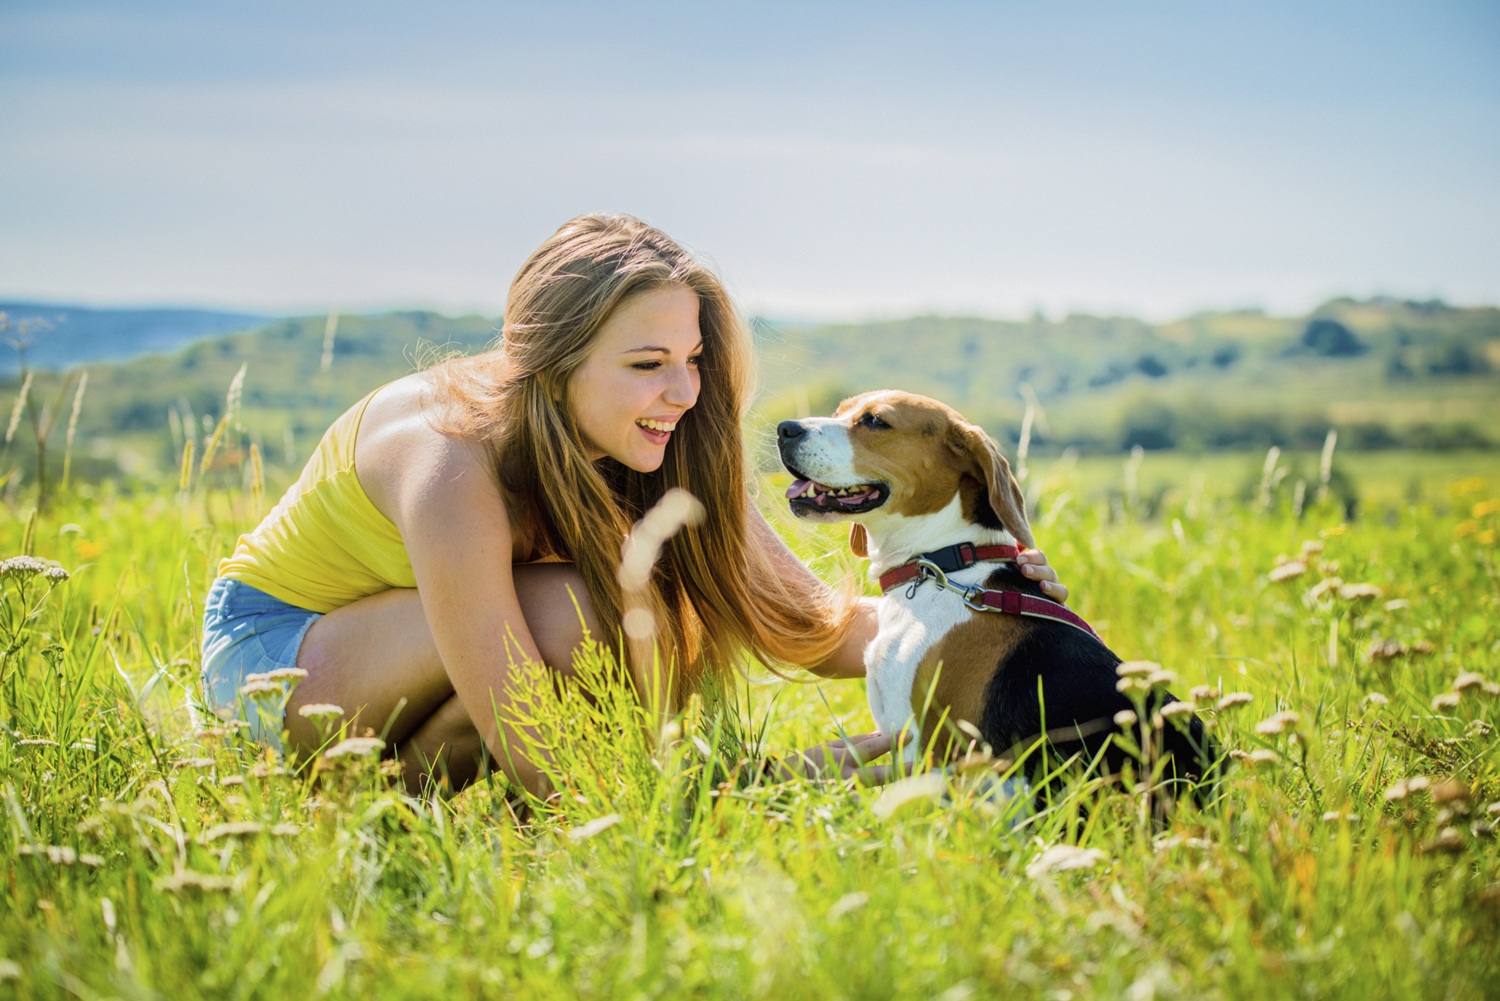 Humane Training With Gentlesteps Pet Stop's Dog Traning Method